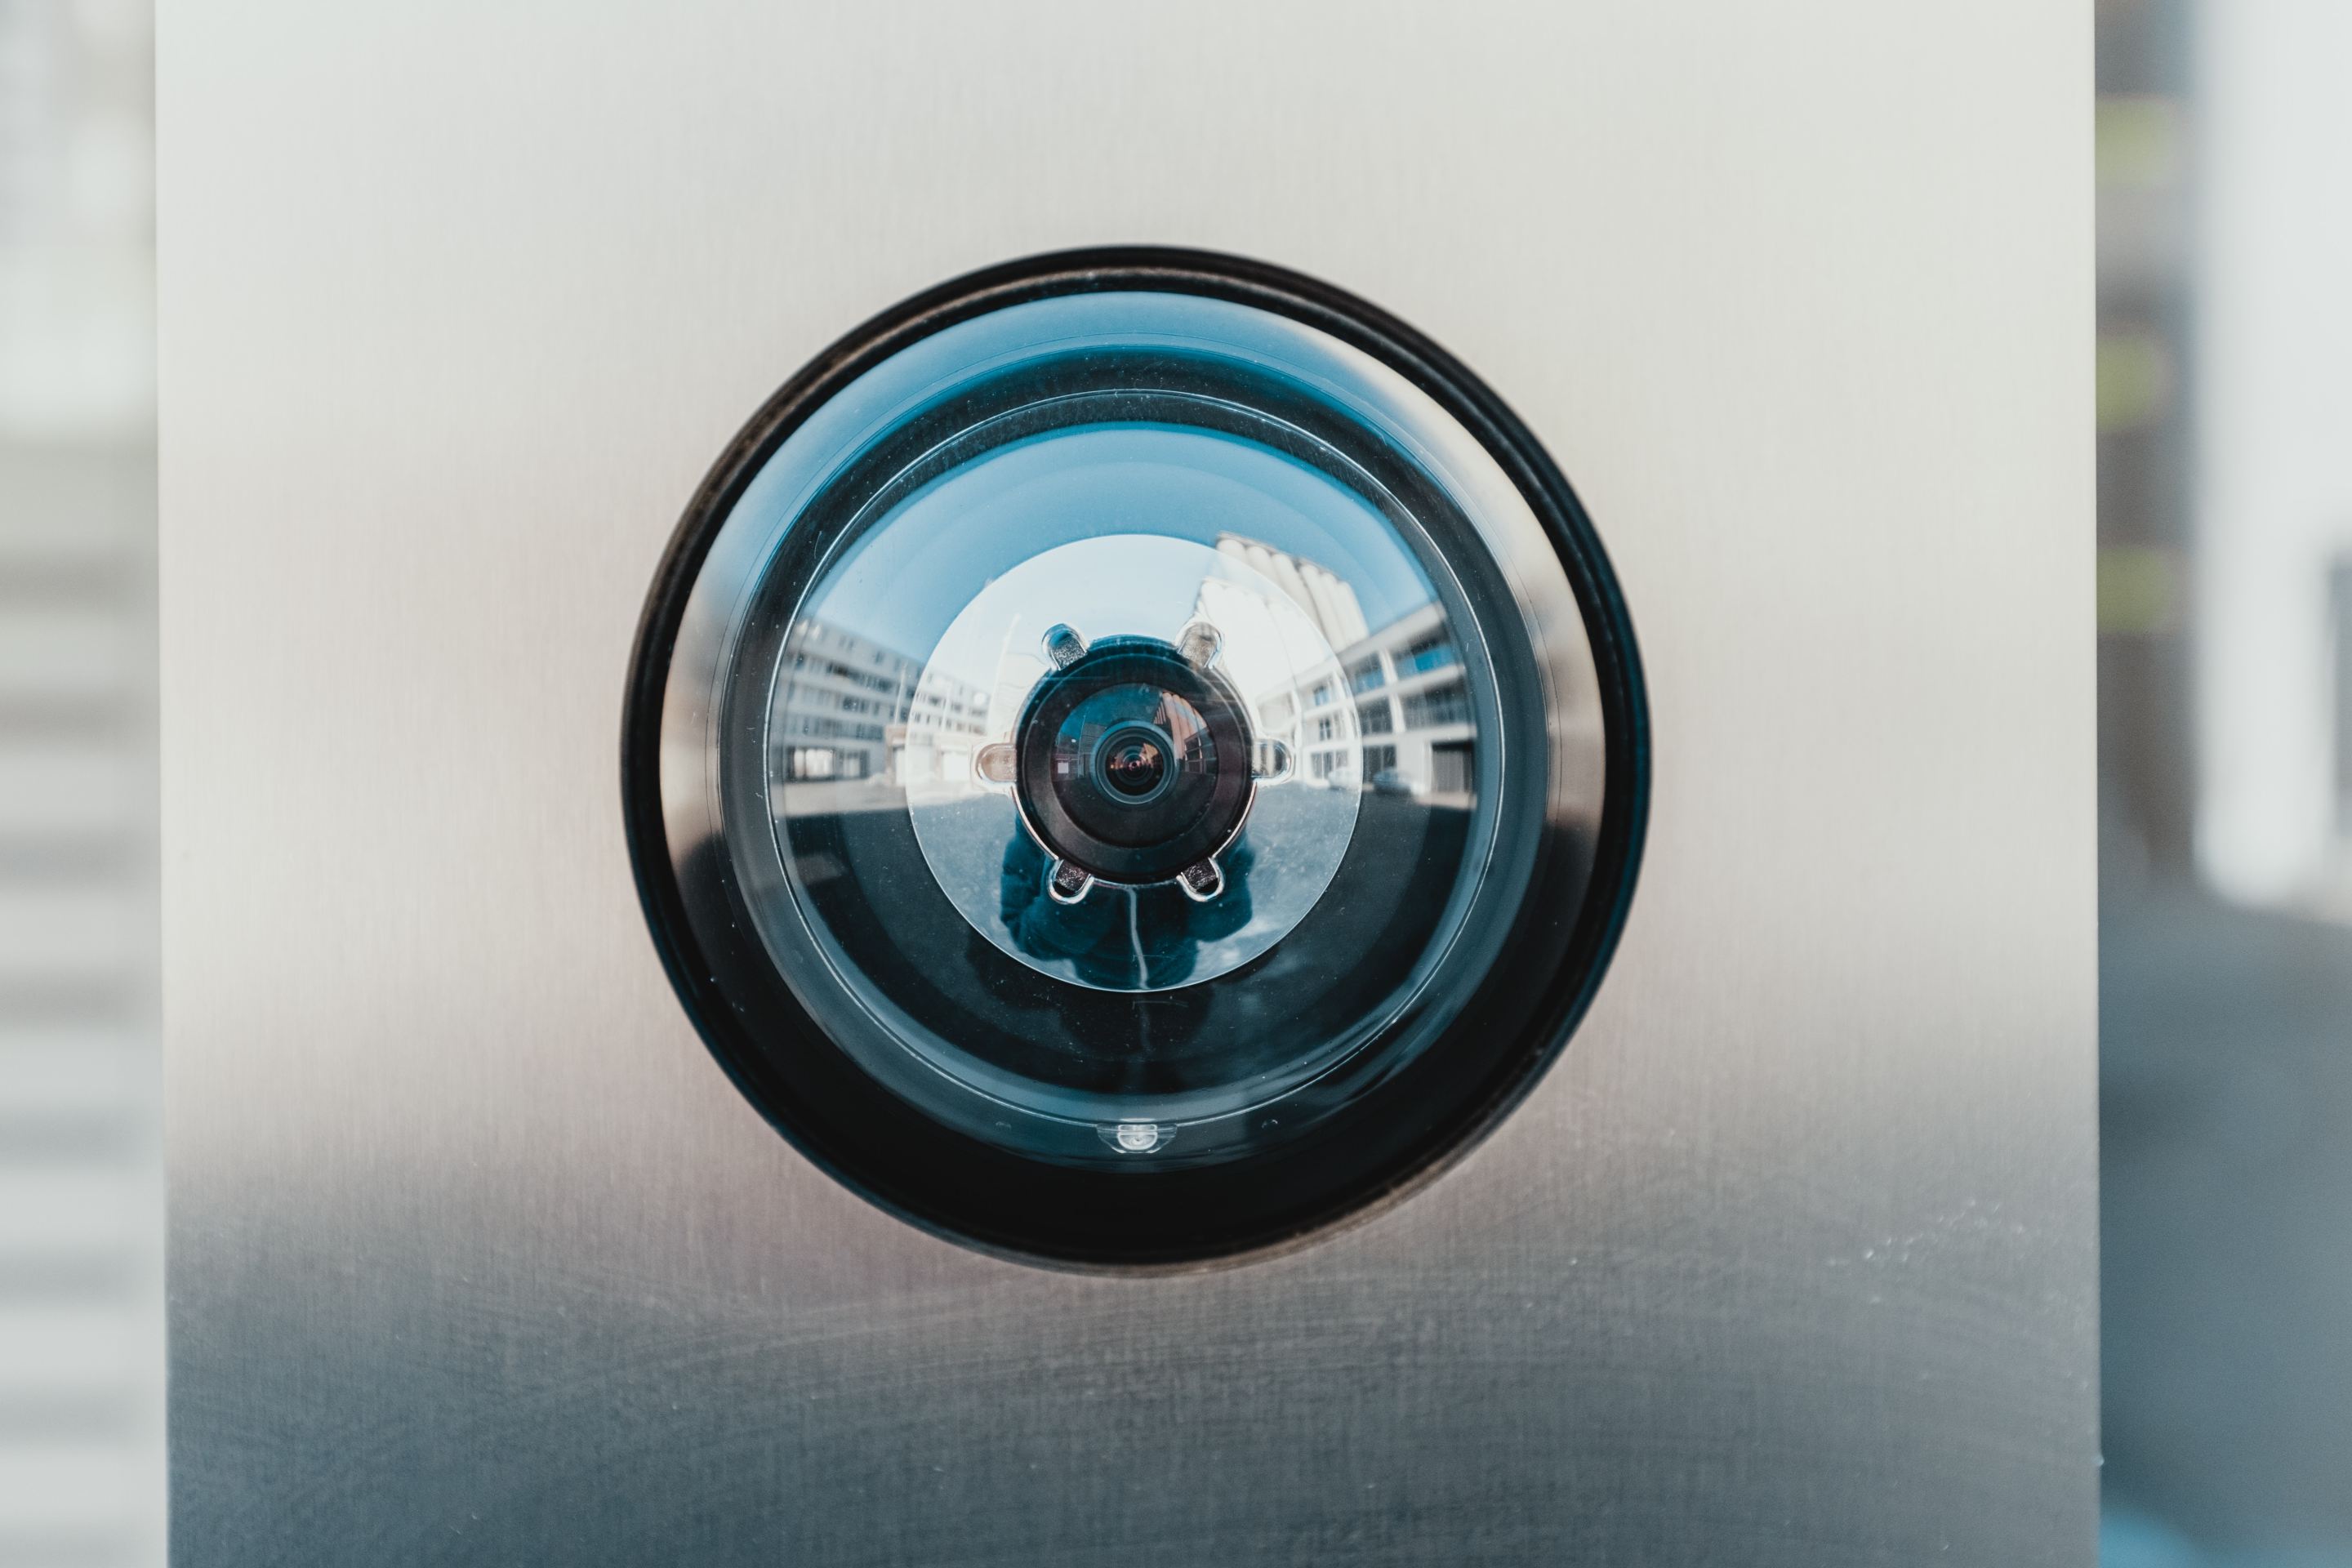 the eye of a surveillance camera